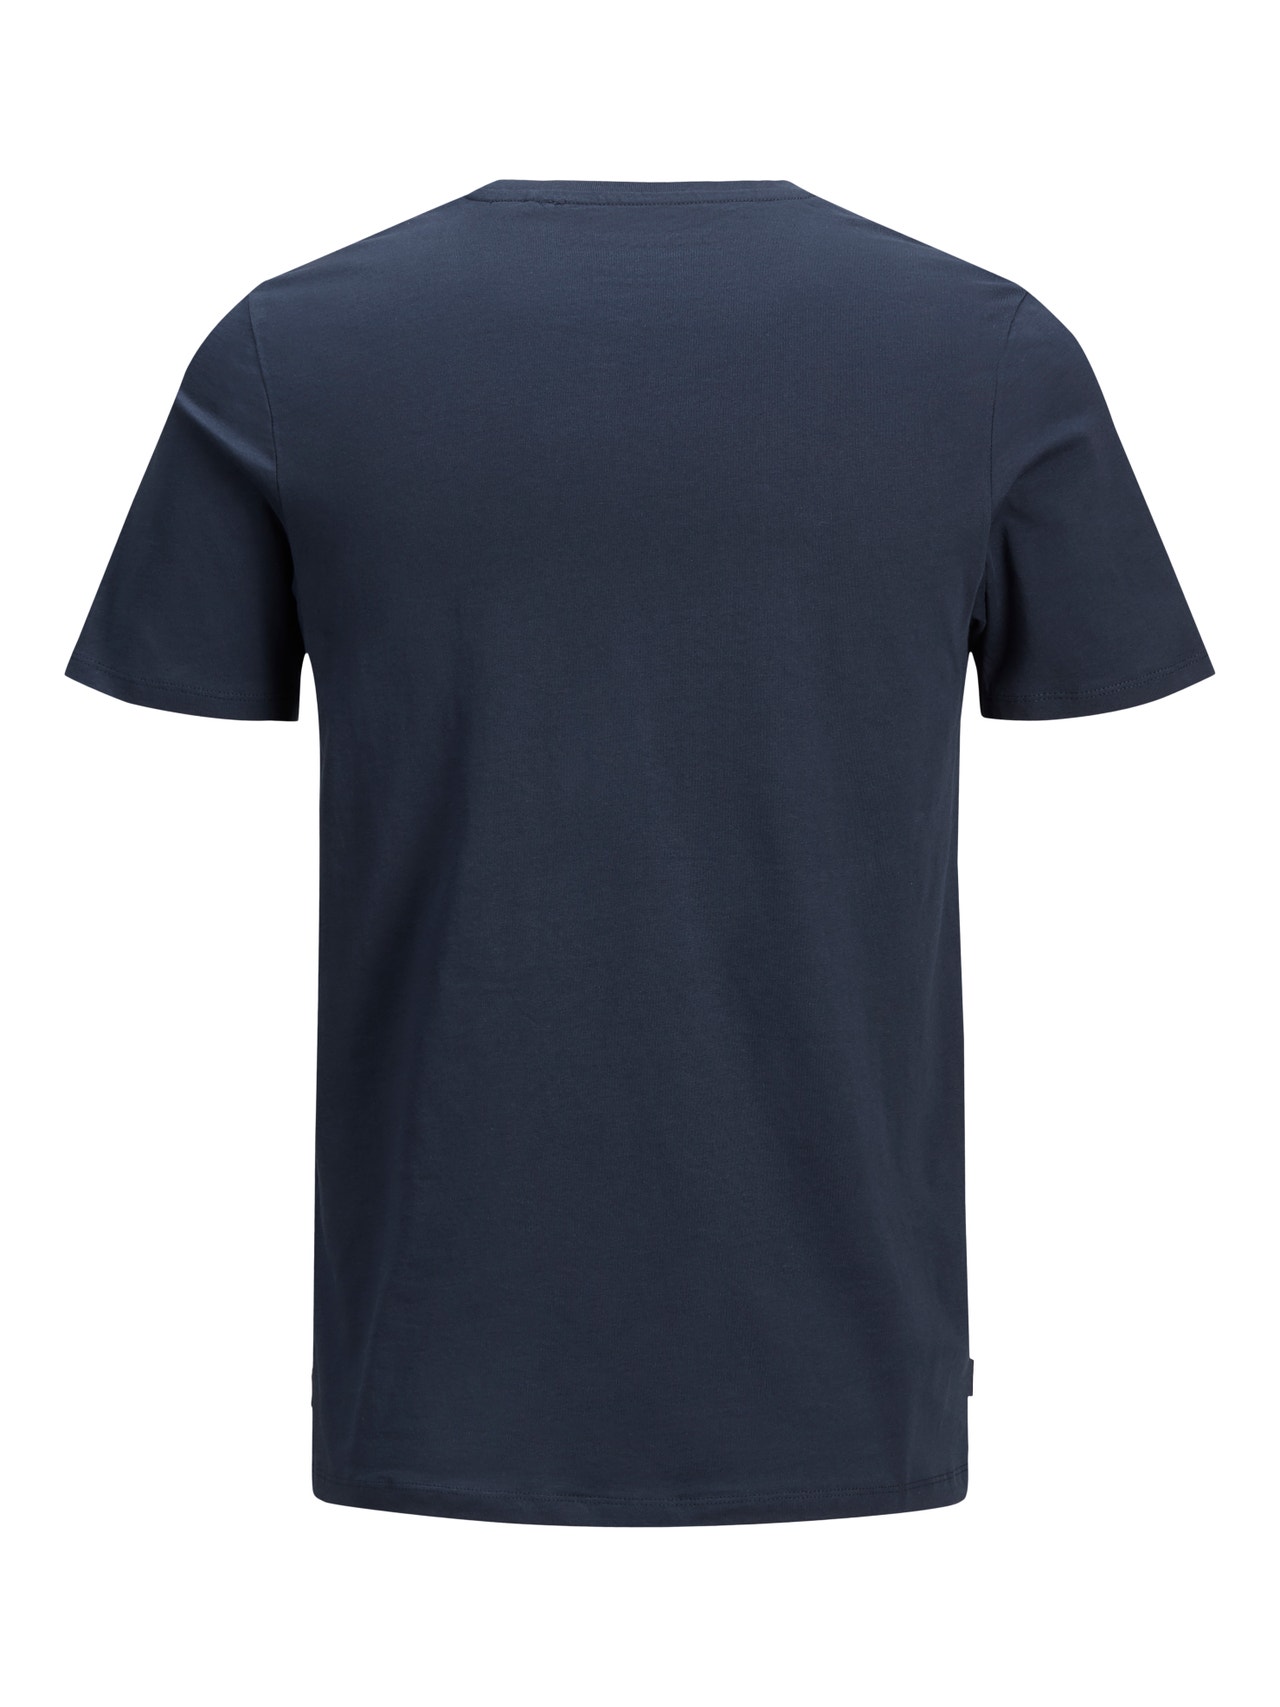 Jack & Jones Plain Crew neck T-shirt -Navy Blazer - 12156101